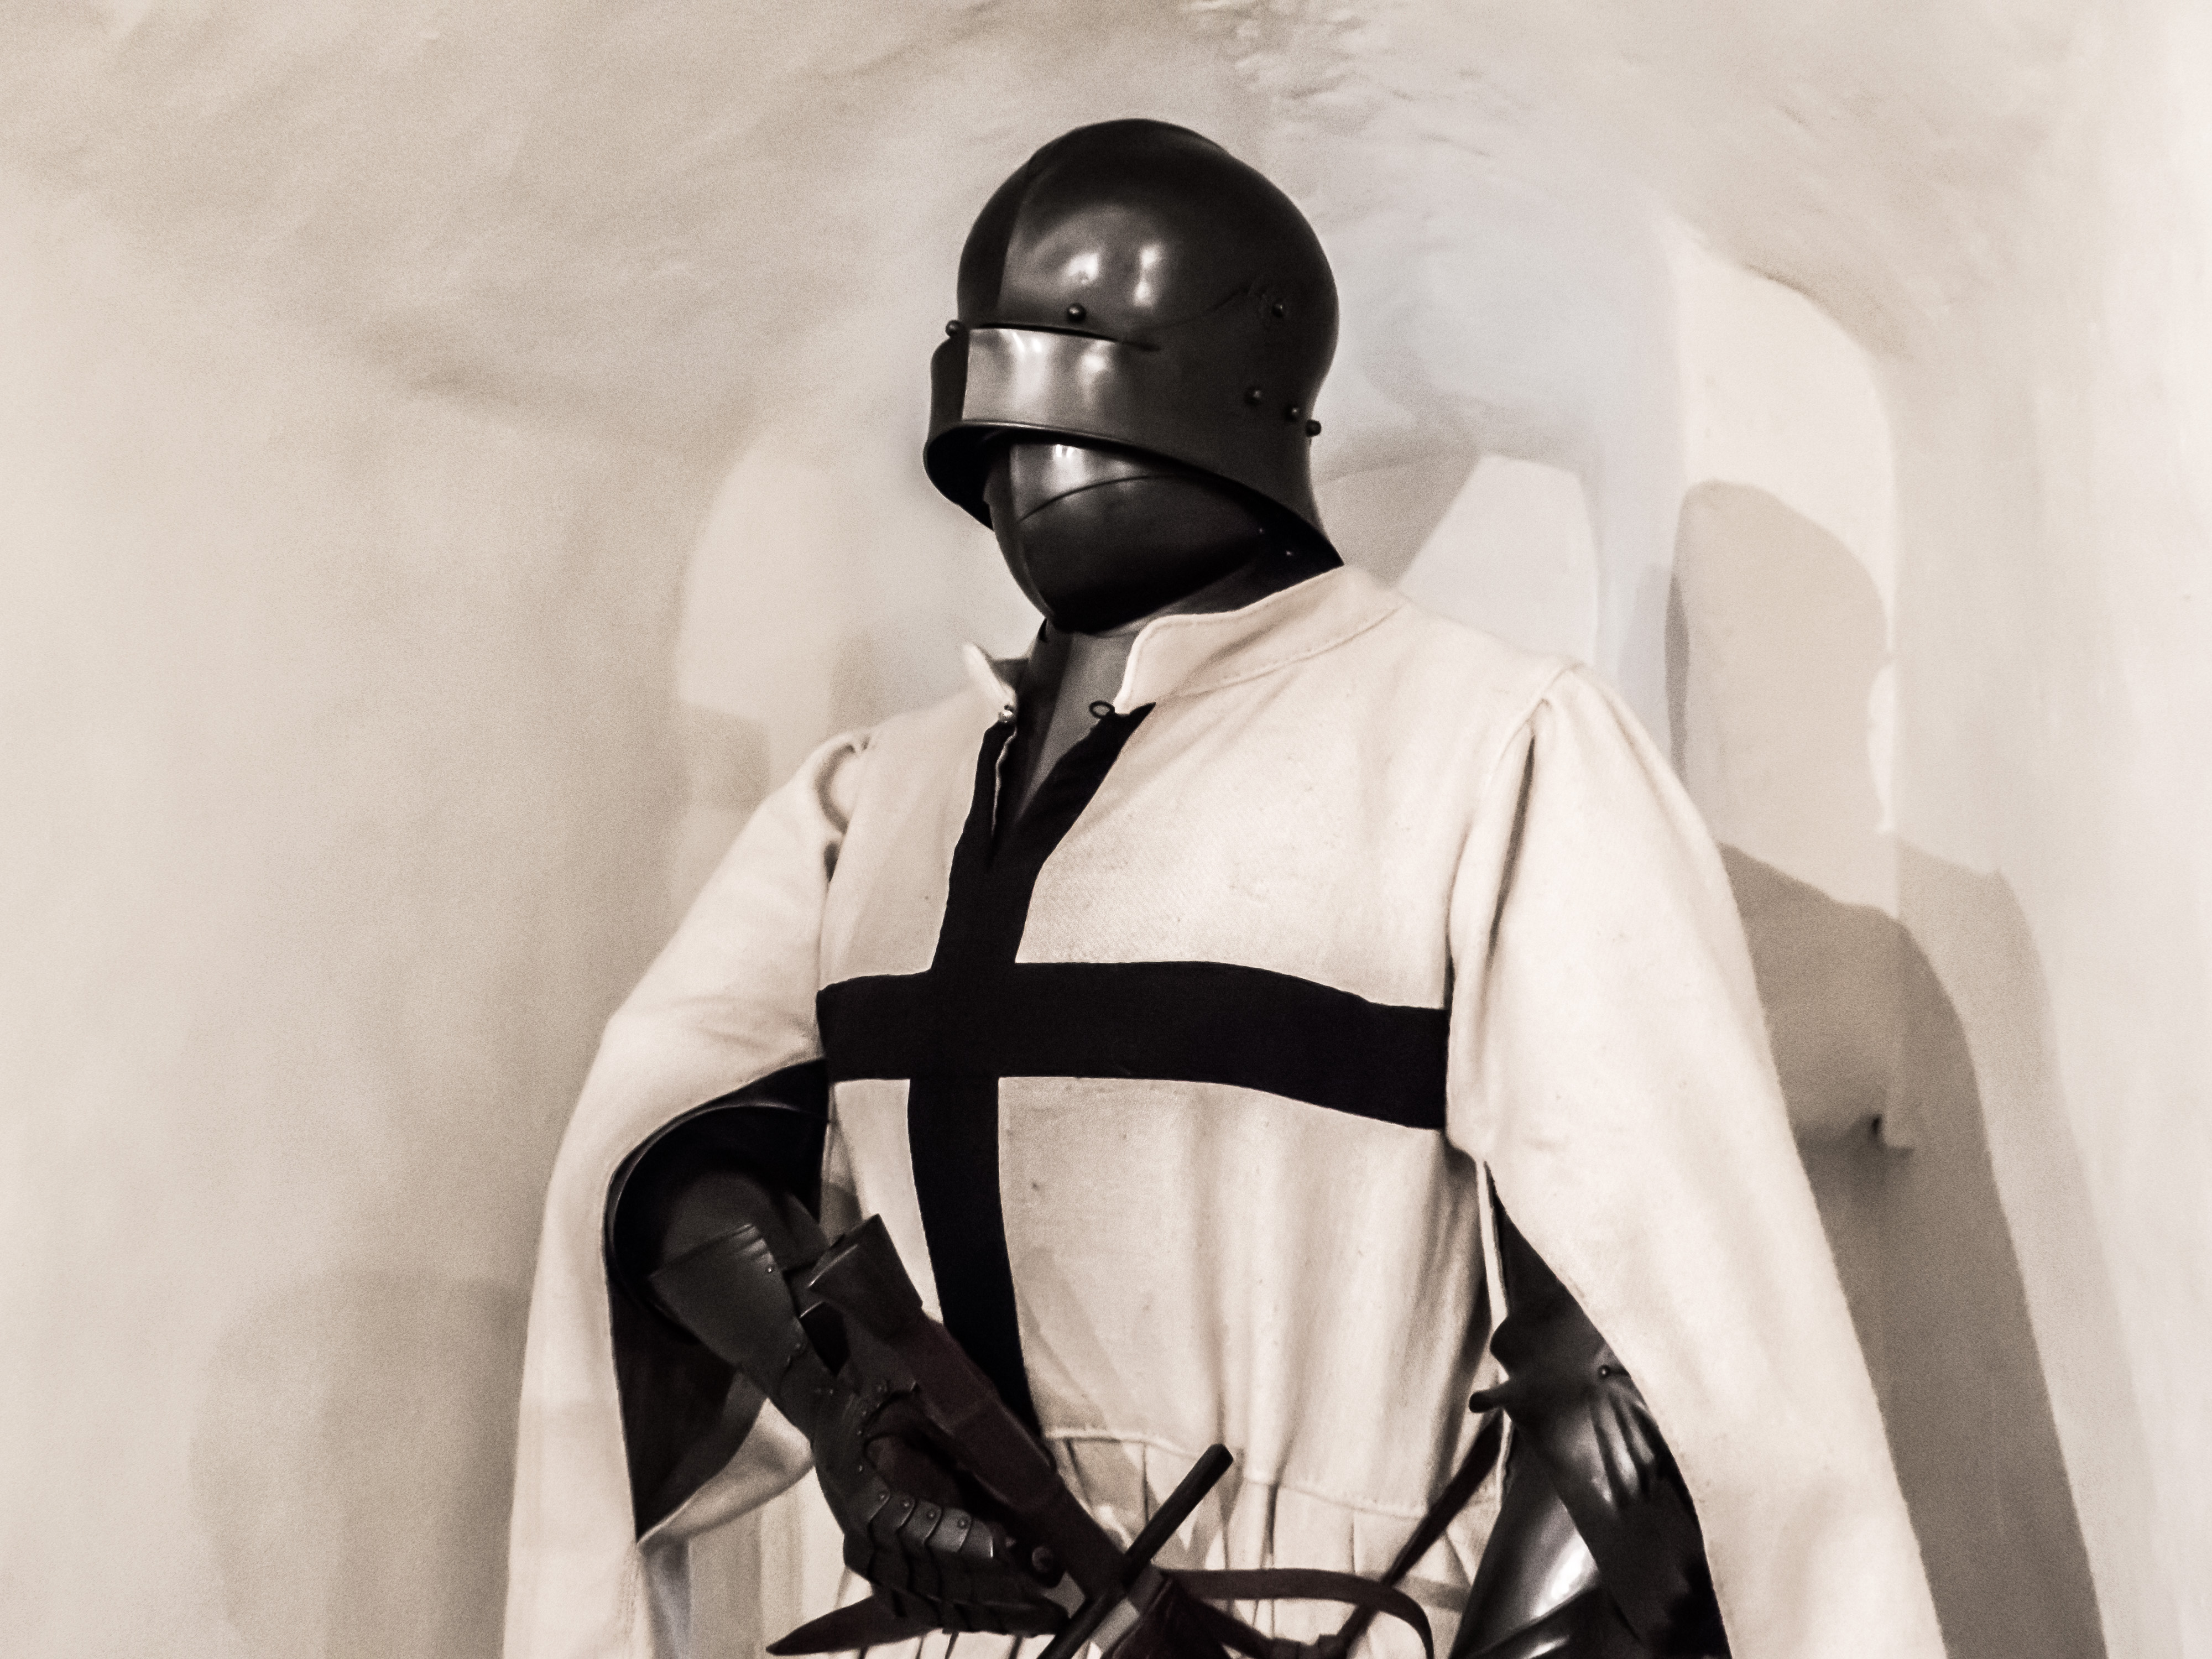 Crusader, Armor, History, War, Sword, HQ Photo